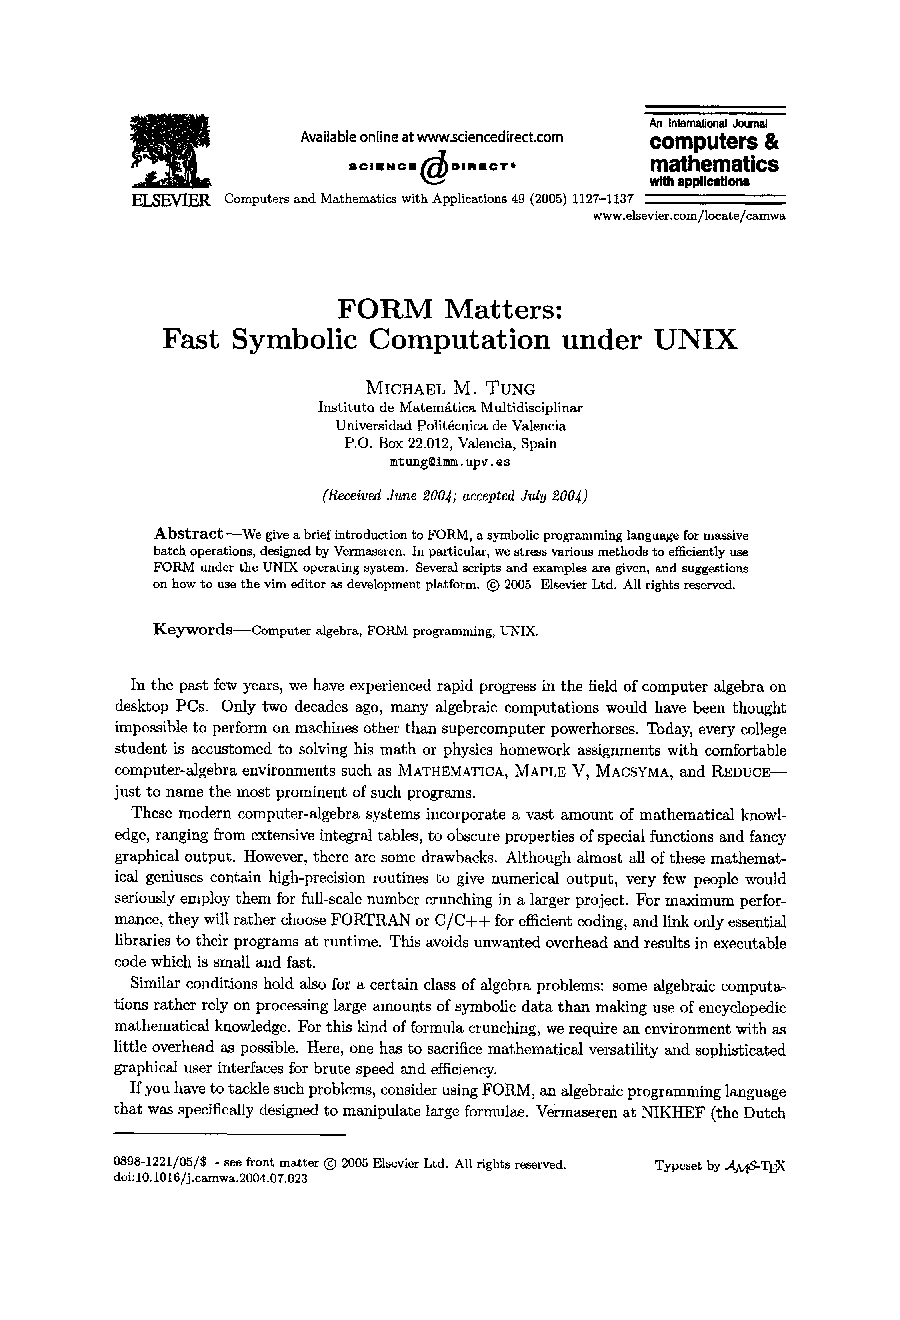 FORM matters: Fast symbolic computation under UNIX